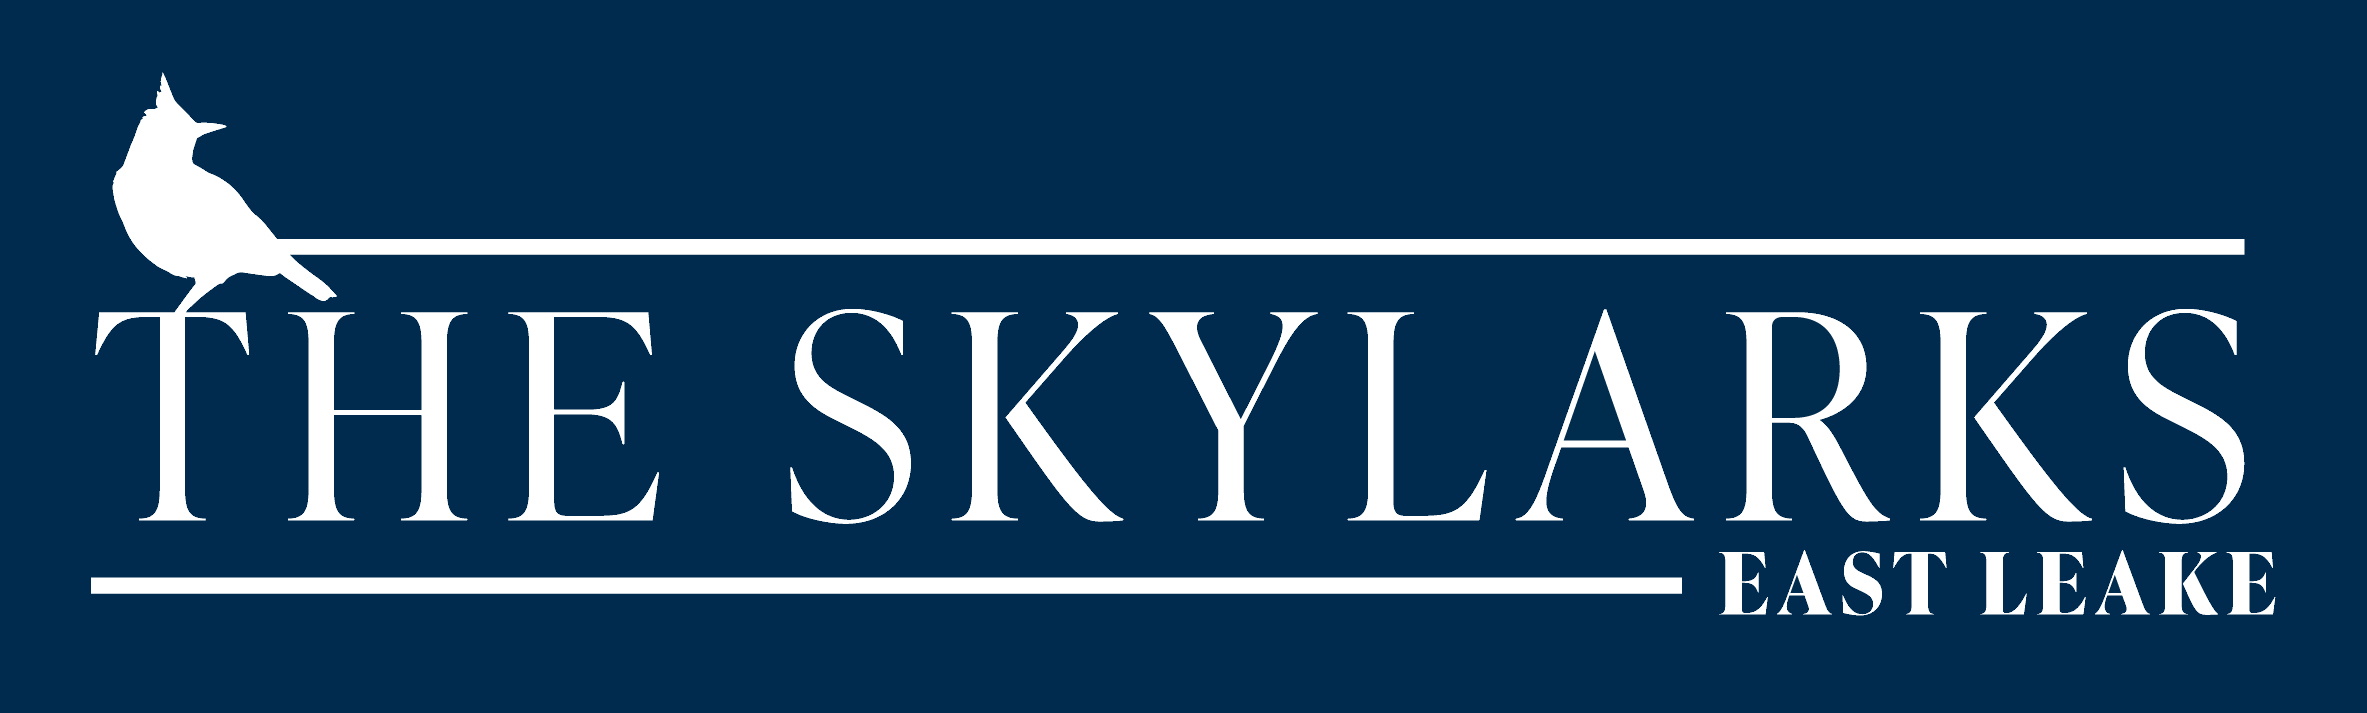 The Skylarks logo